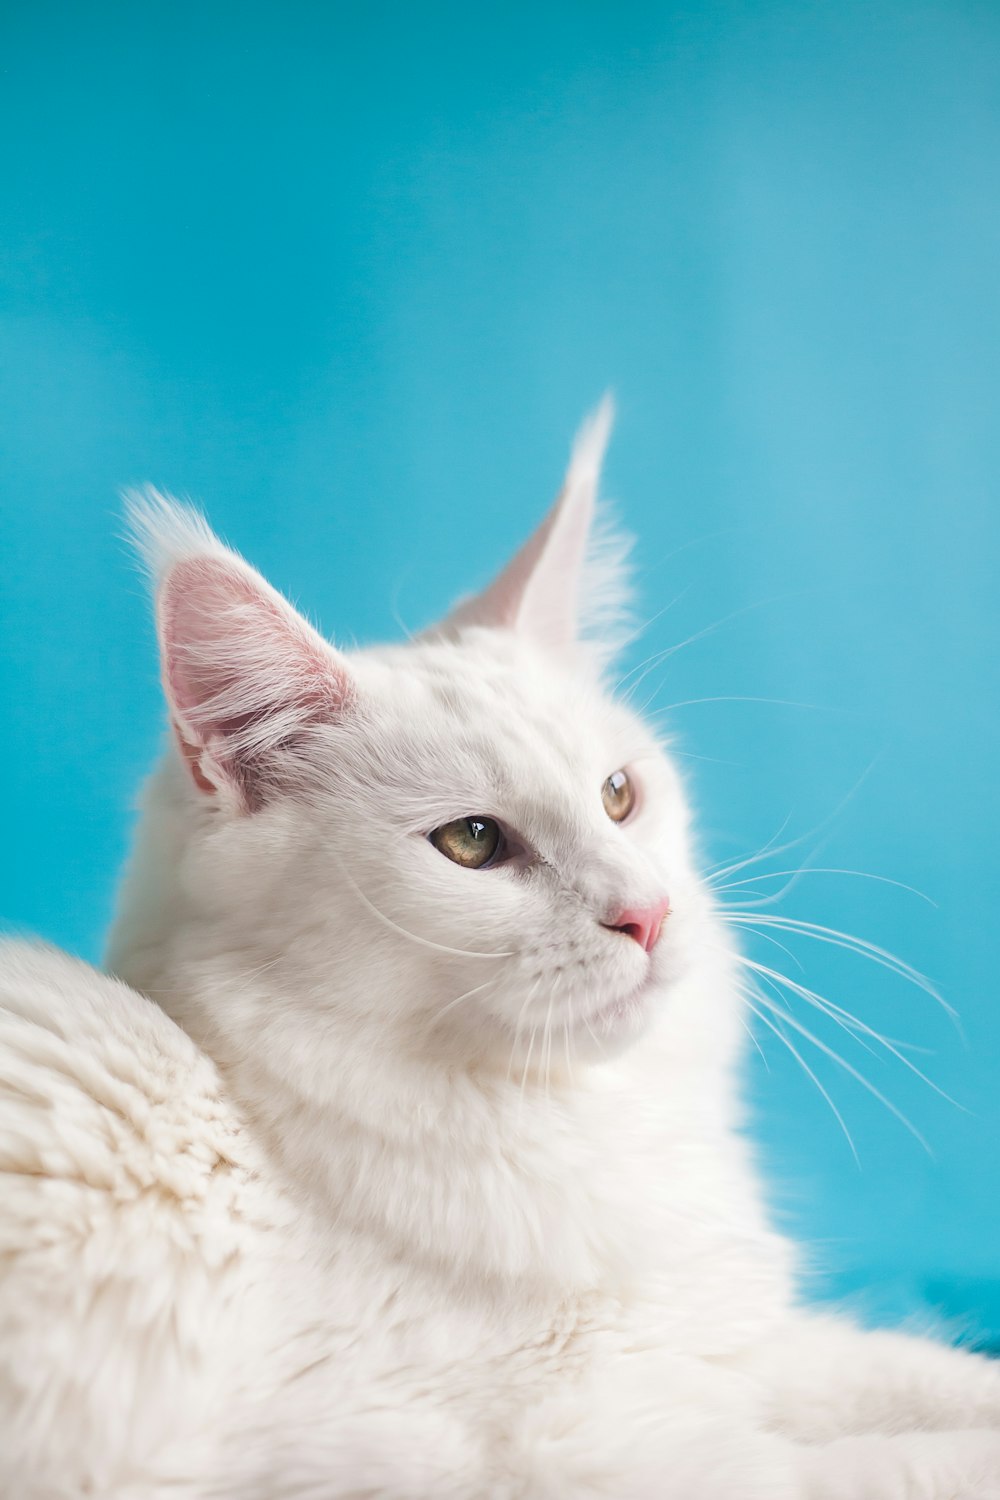 Download Cat Pfp White Cat Royalty-Free Stock Illustration Image